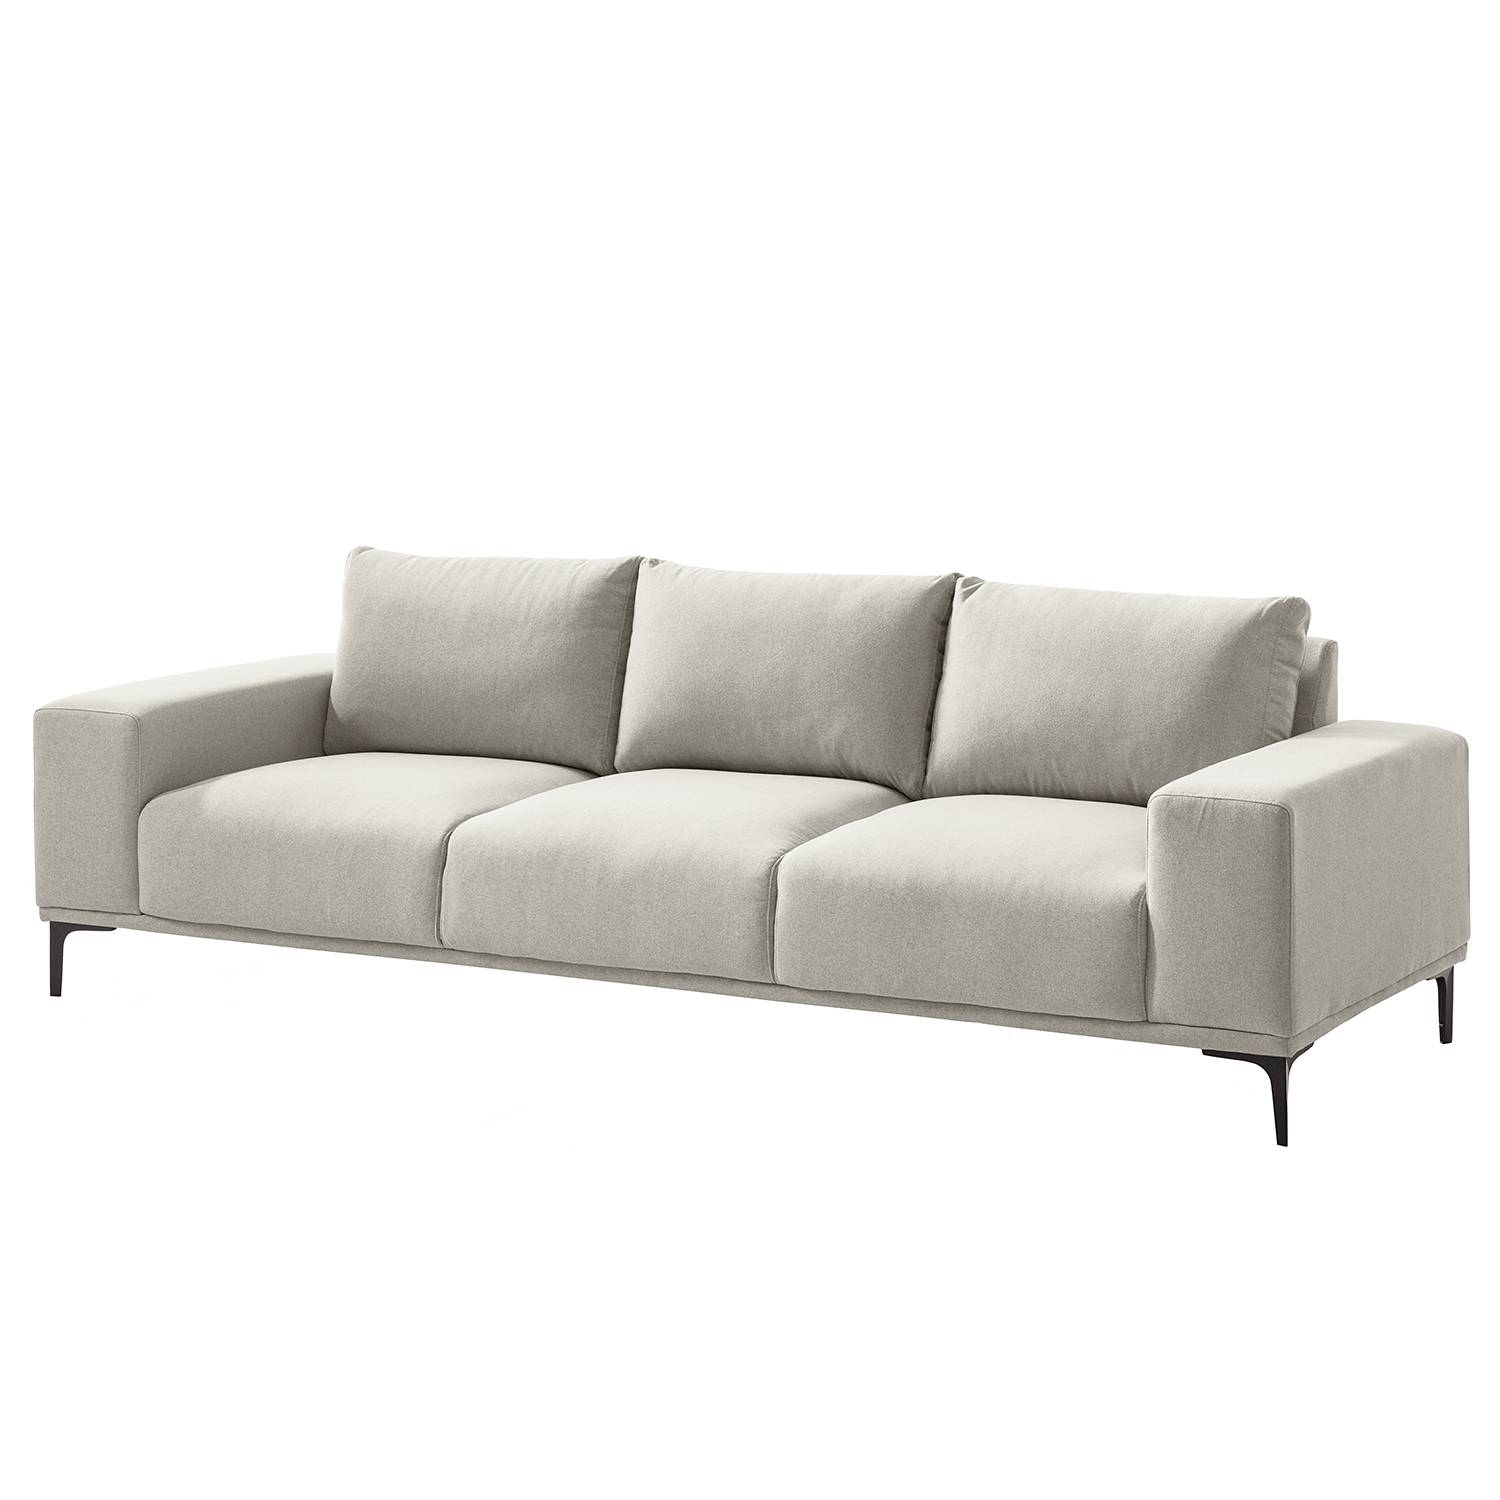 3-sitzer sofa connolly kaufen | home24